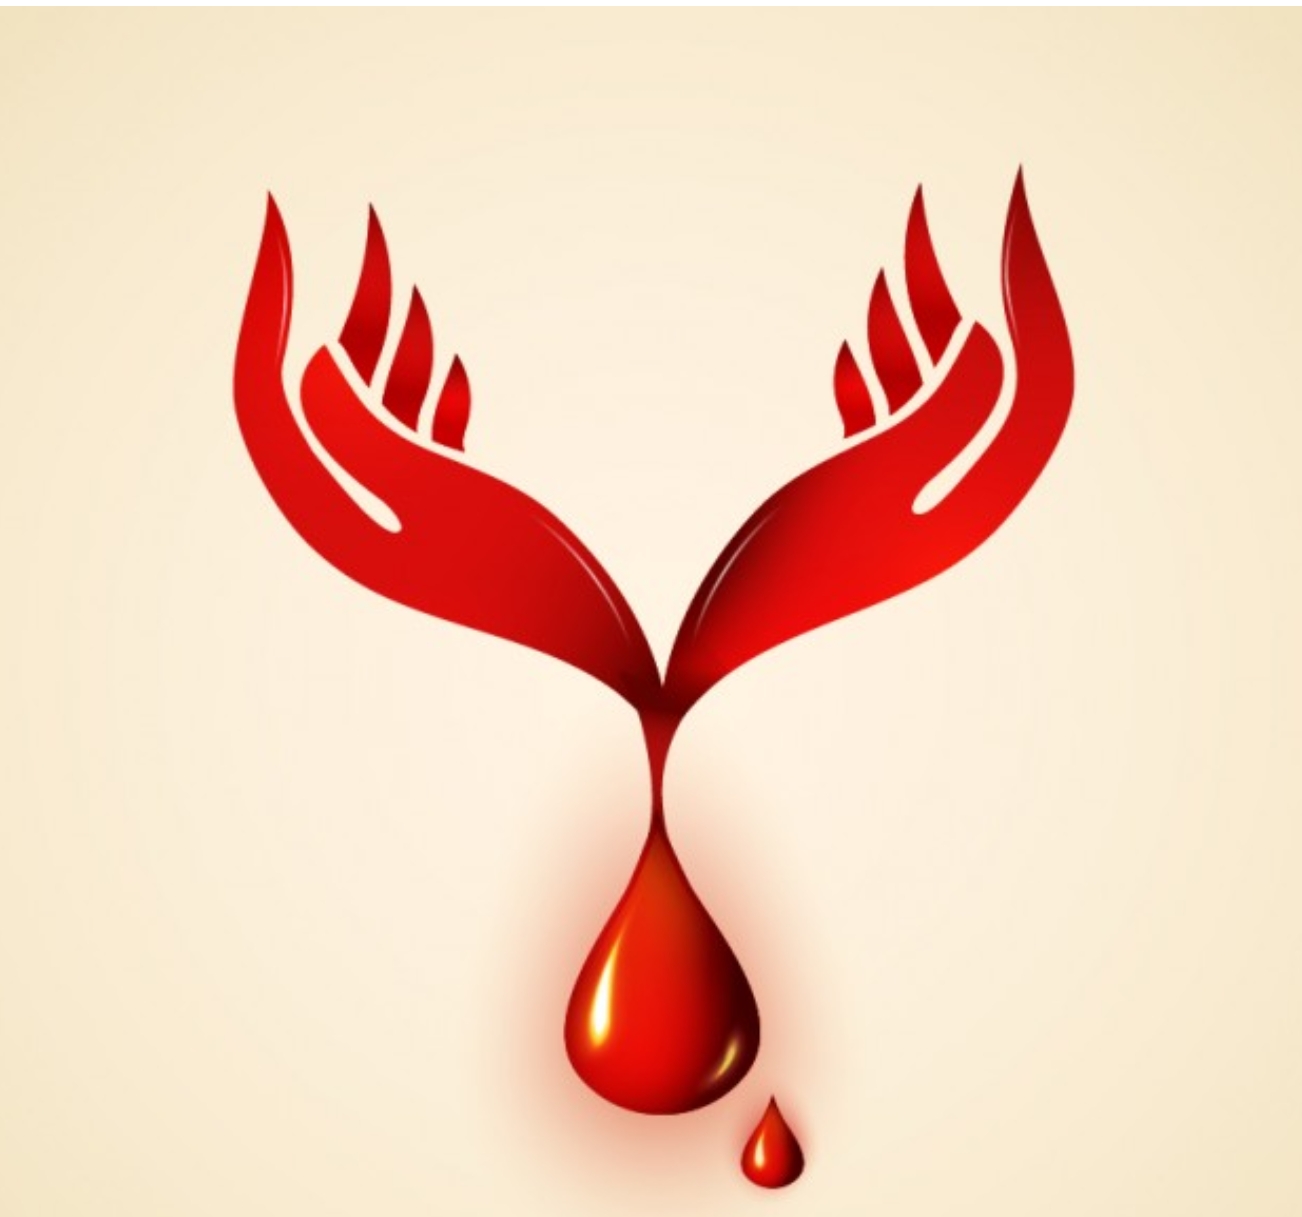 Embliyma donorstva. Капля крови логотип. Символ донорства крови. Донорство крови логотип. De sang